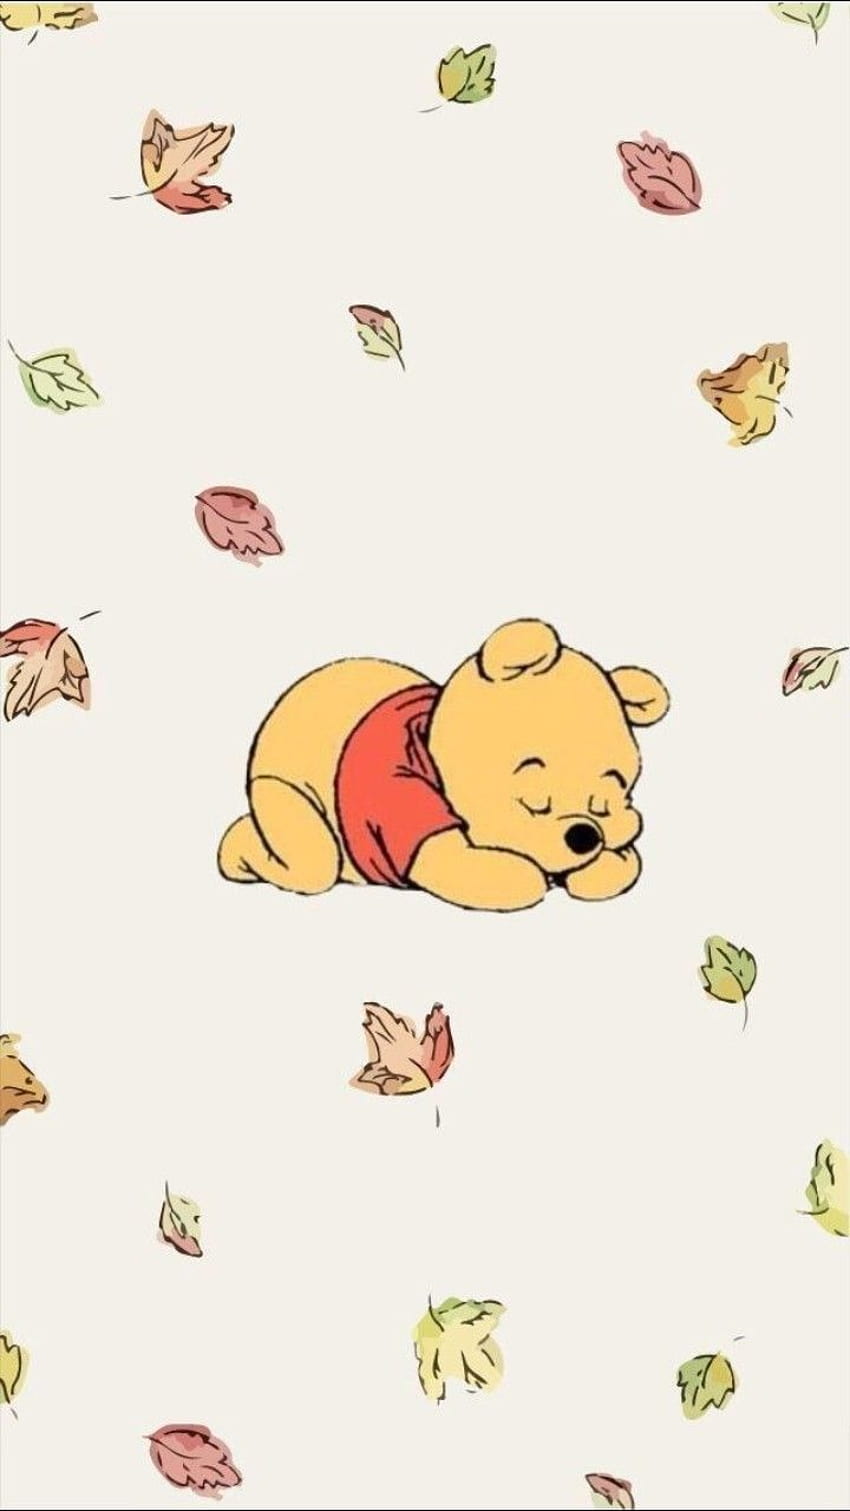 classic winnie the pooh iphone wallpaper